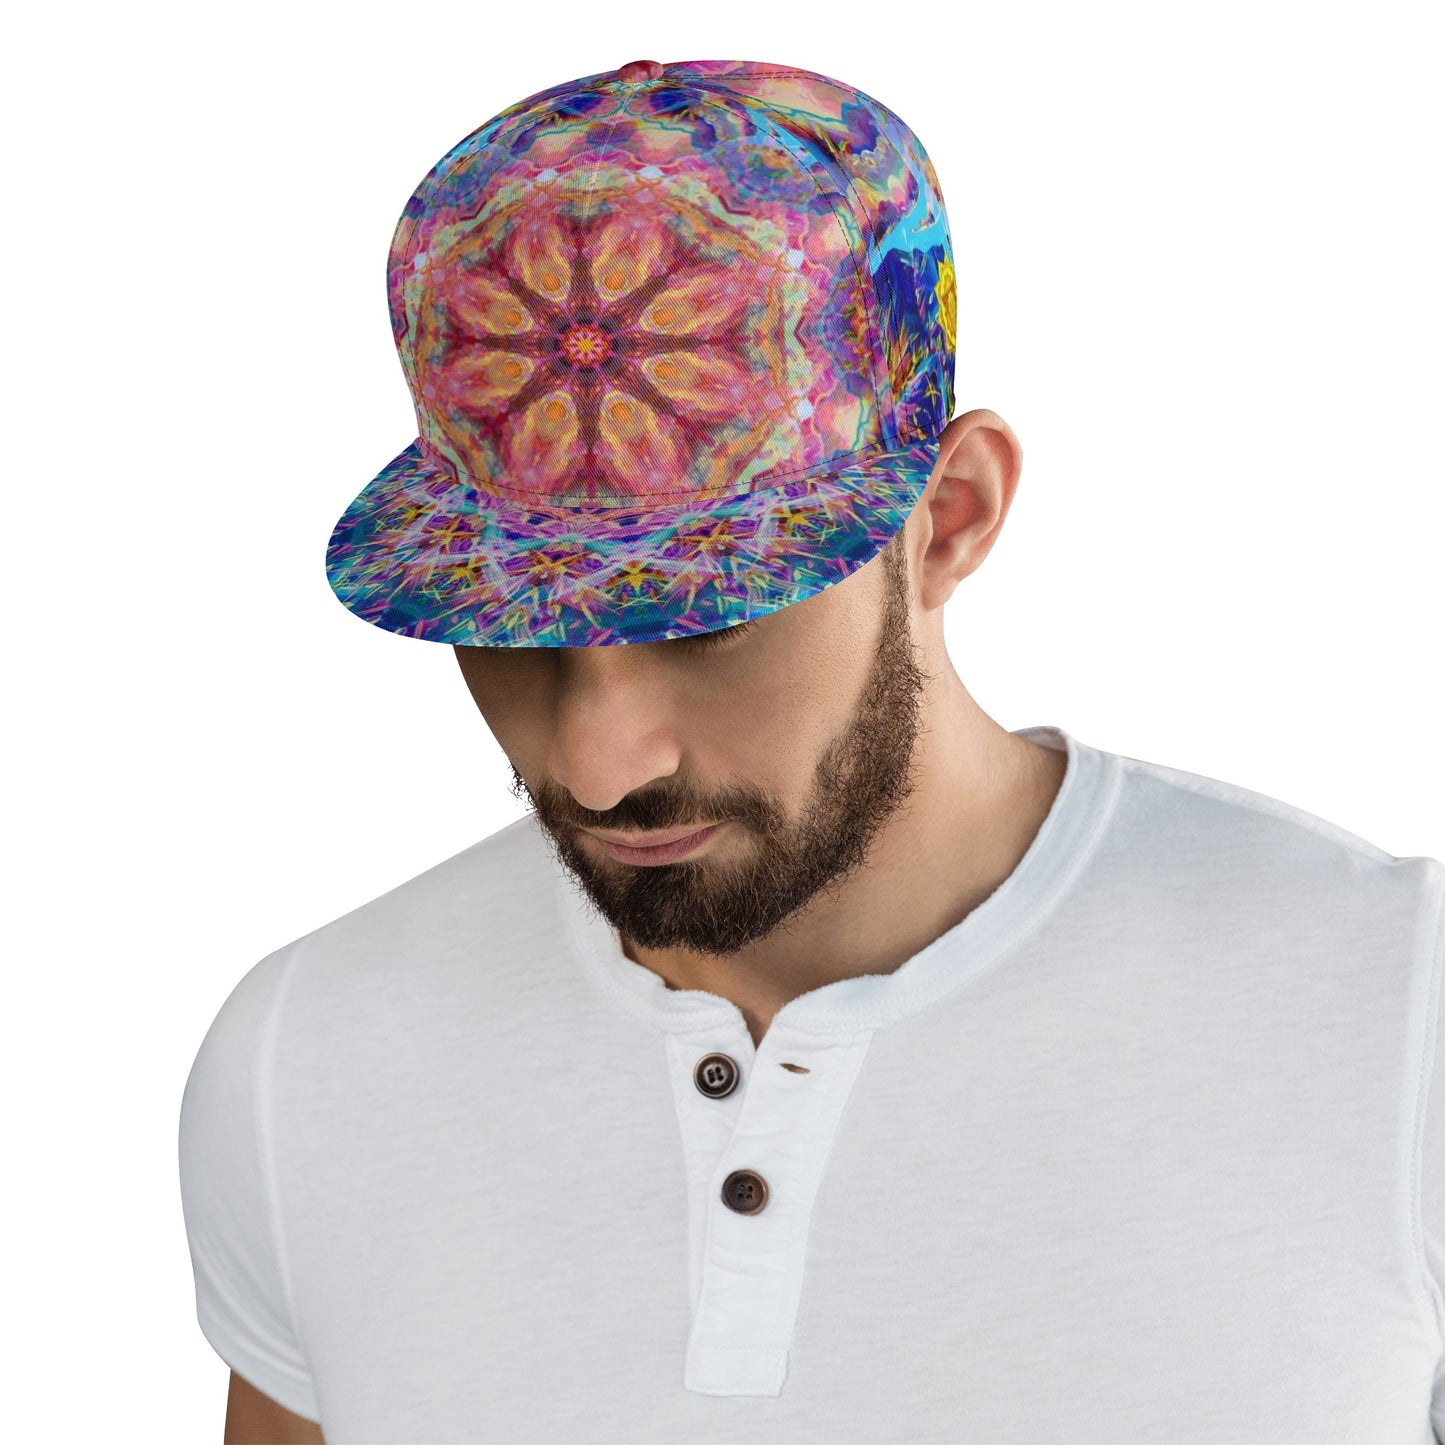 Painted Mandala Snapback Hat